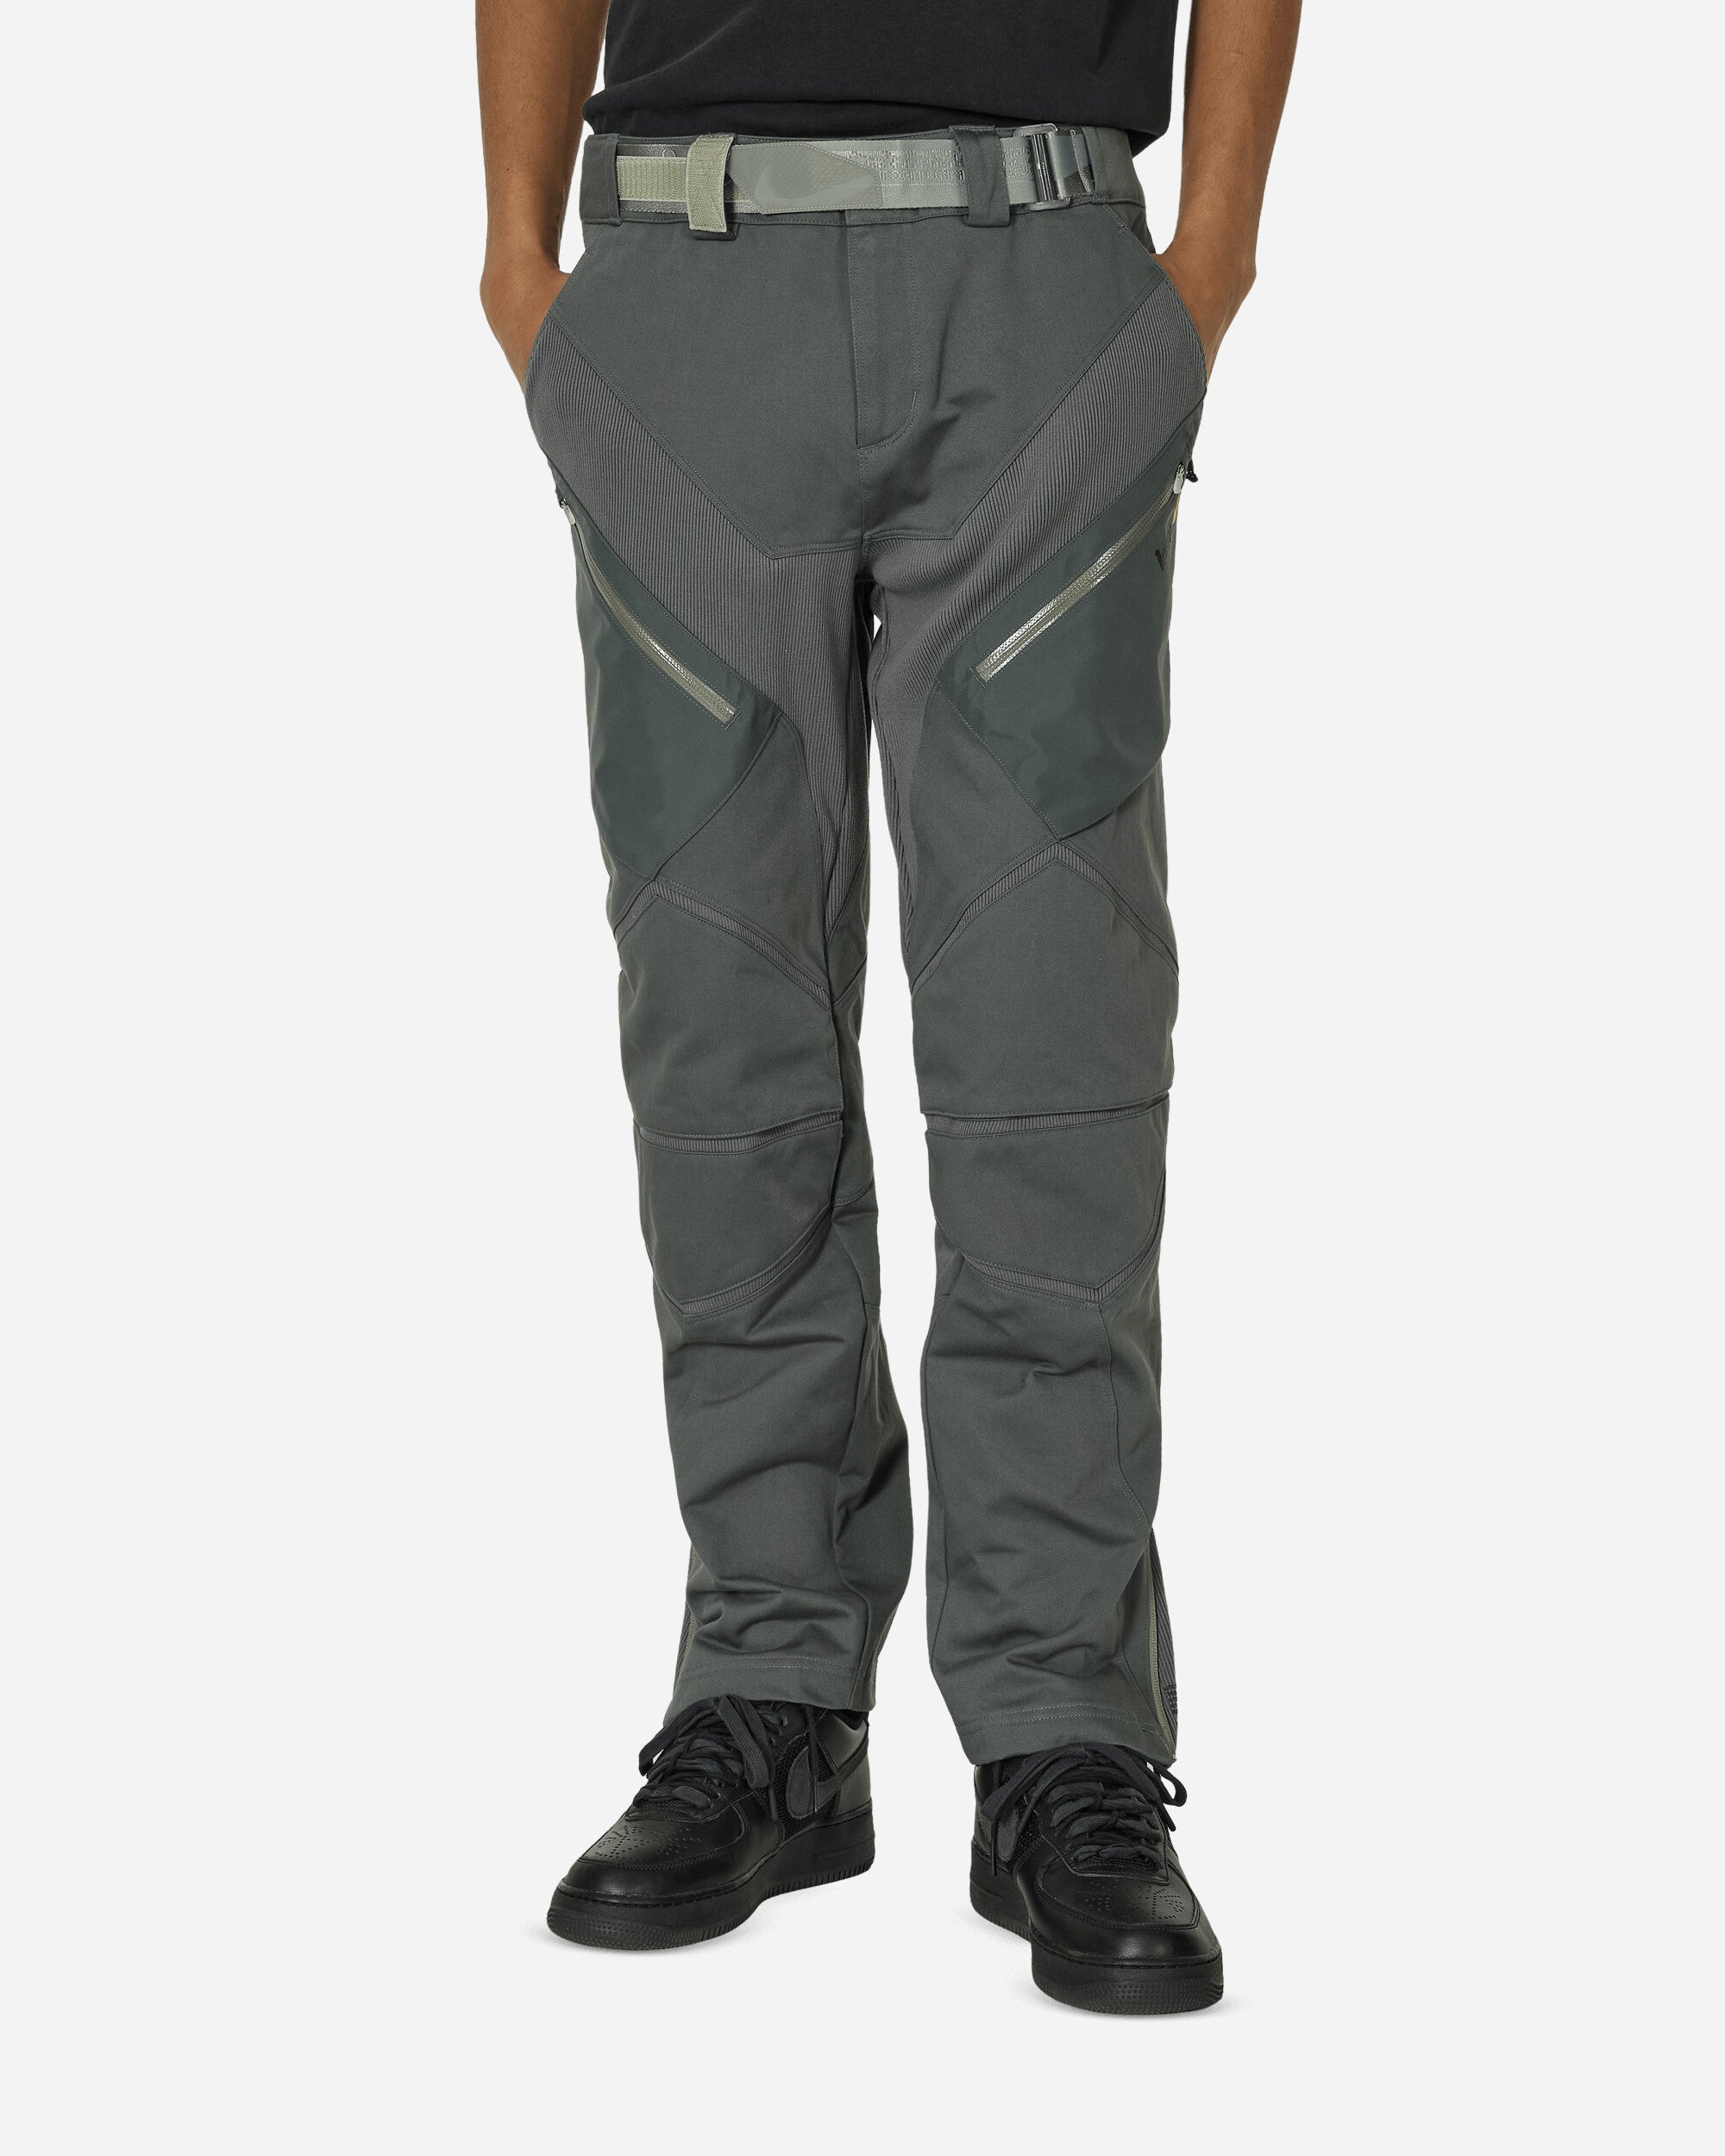 Nike U Nrg Ispa Tstltn Mt Pants Iron Grey/Dark Stucco Pants Sweatpants FJ7371-068